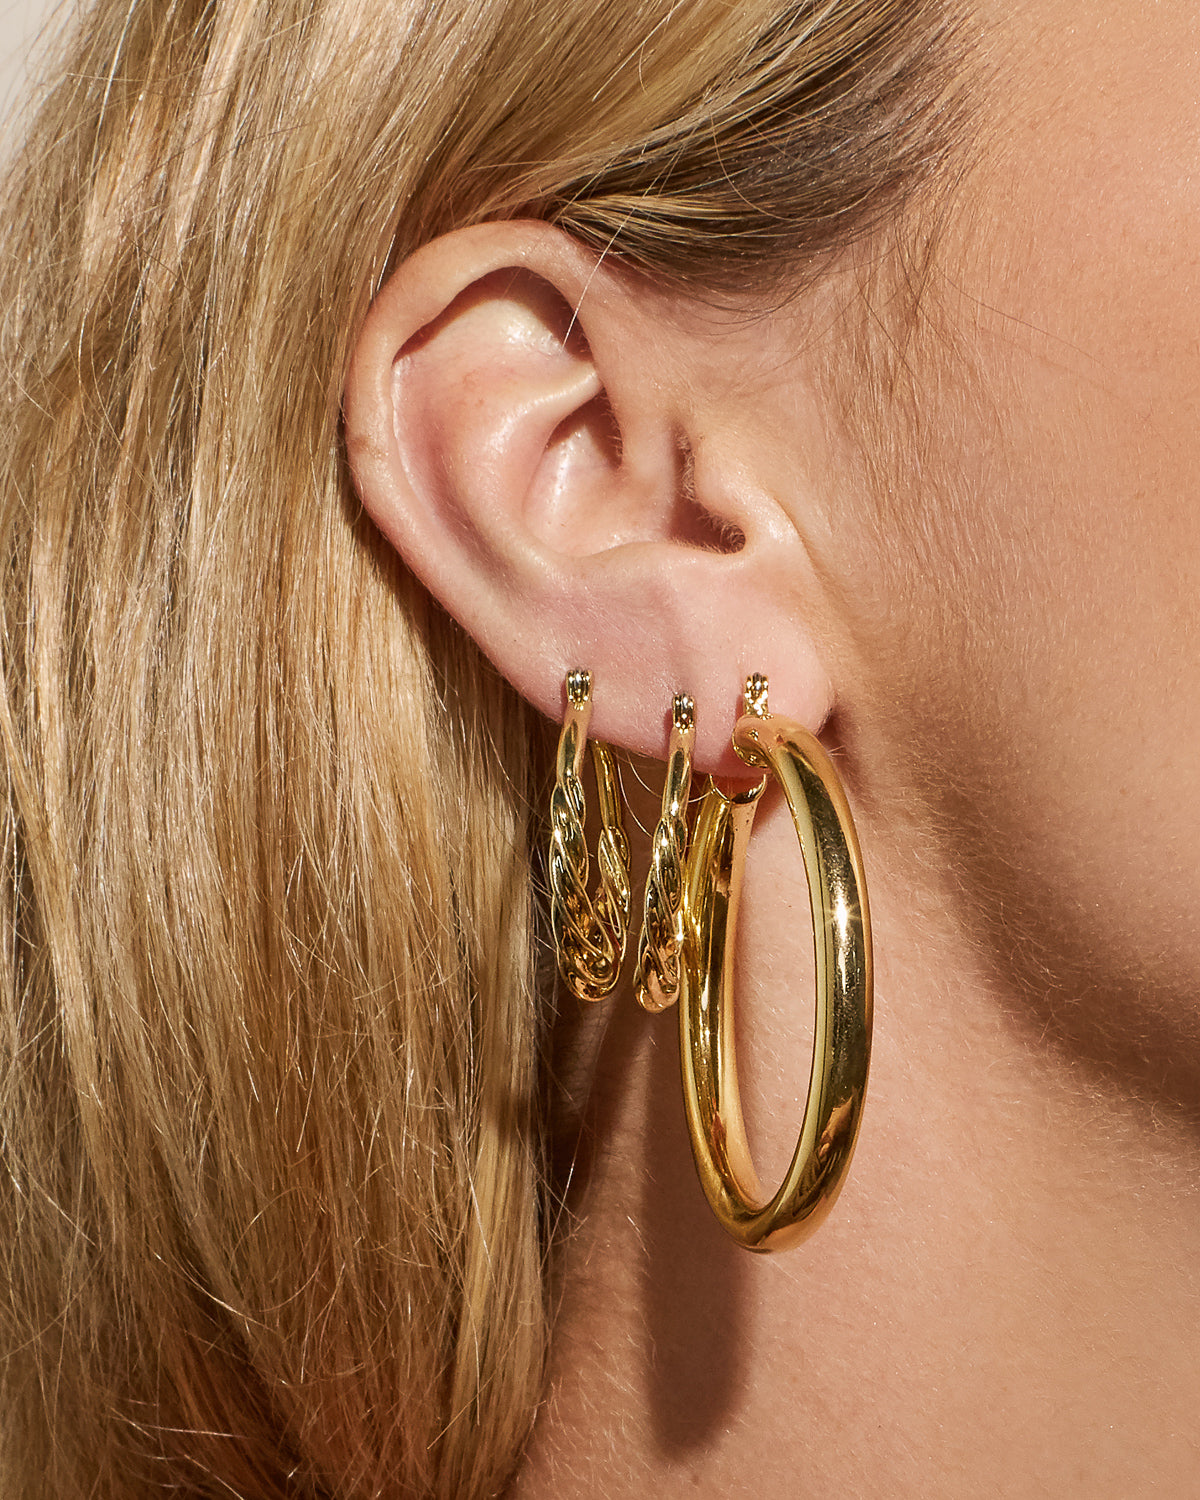 Luv Aj Amalfi Tube Hoop Earrings in Polished 14k Antique Gold Plated